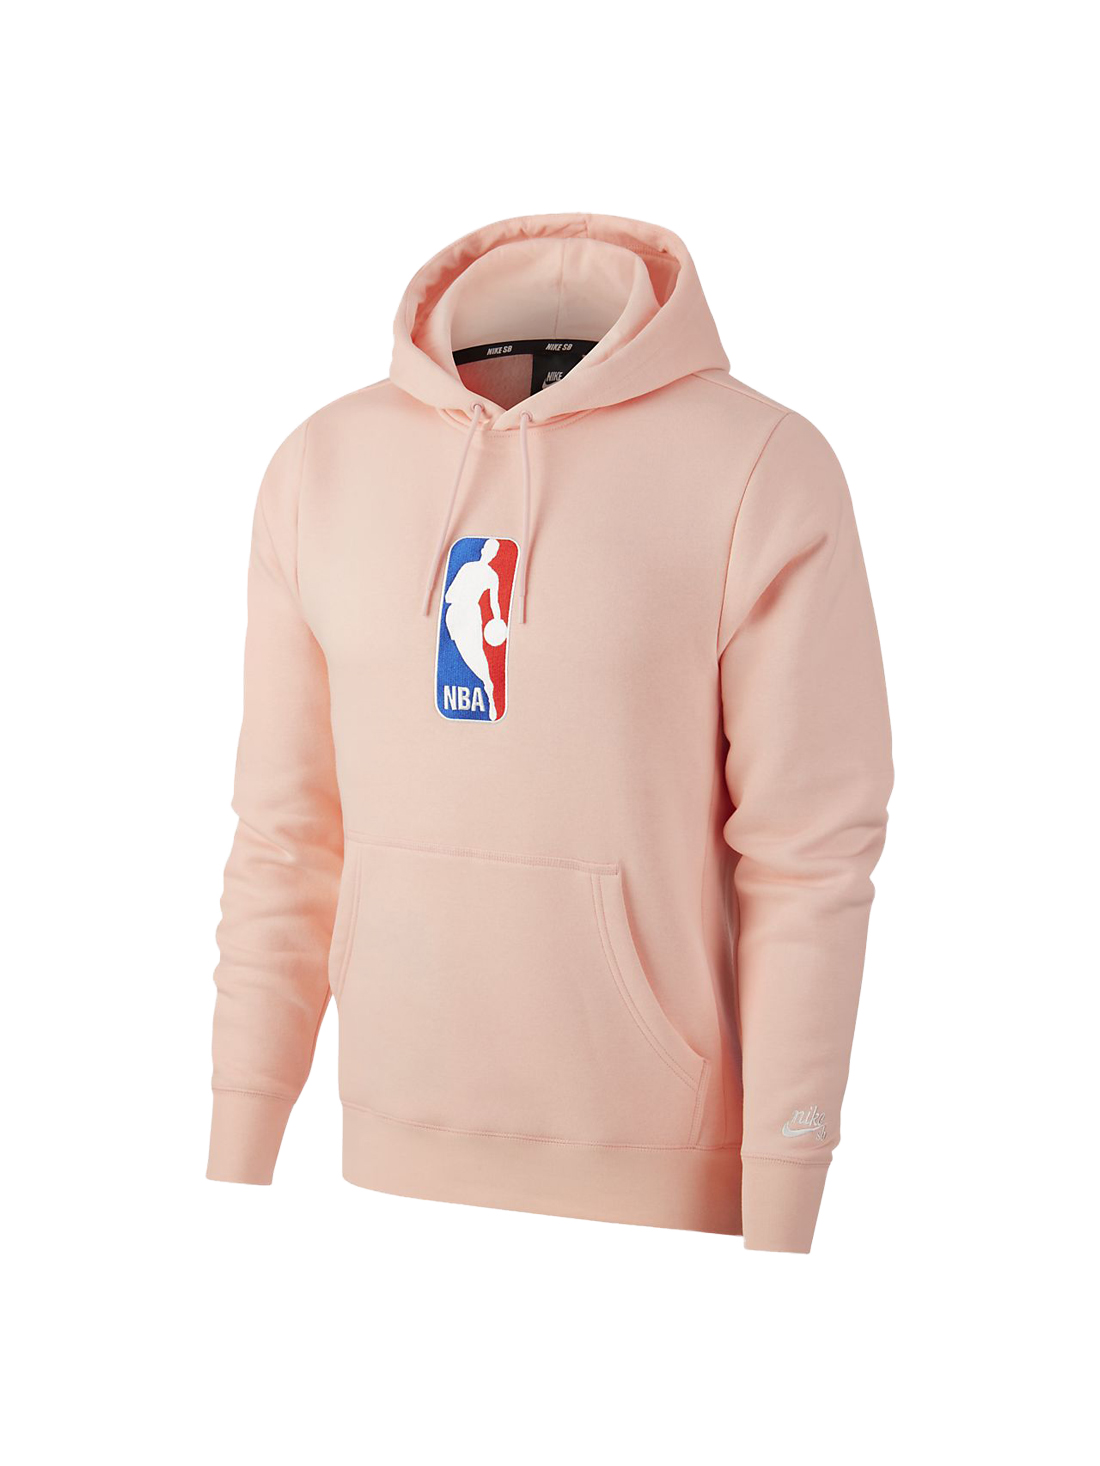 Nike SB X NBA Icon Hood - Storm Pink 